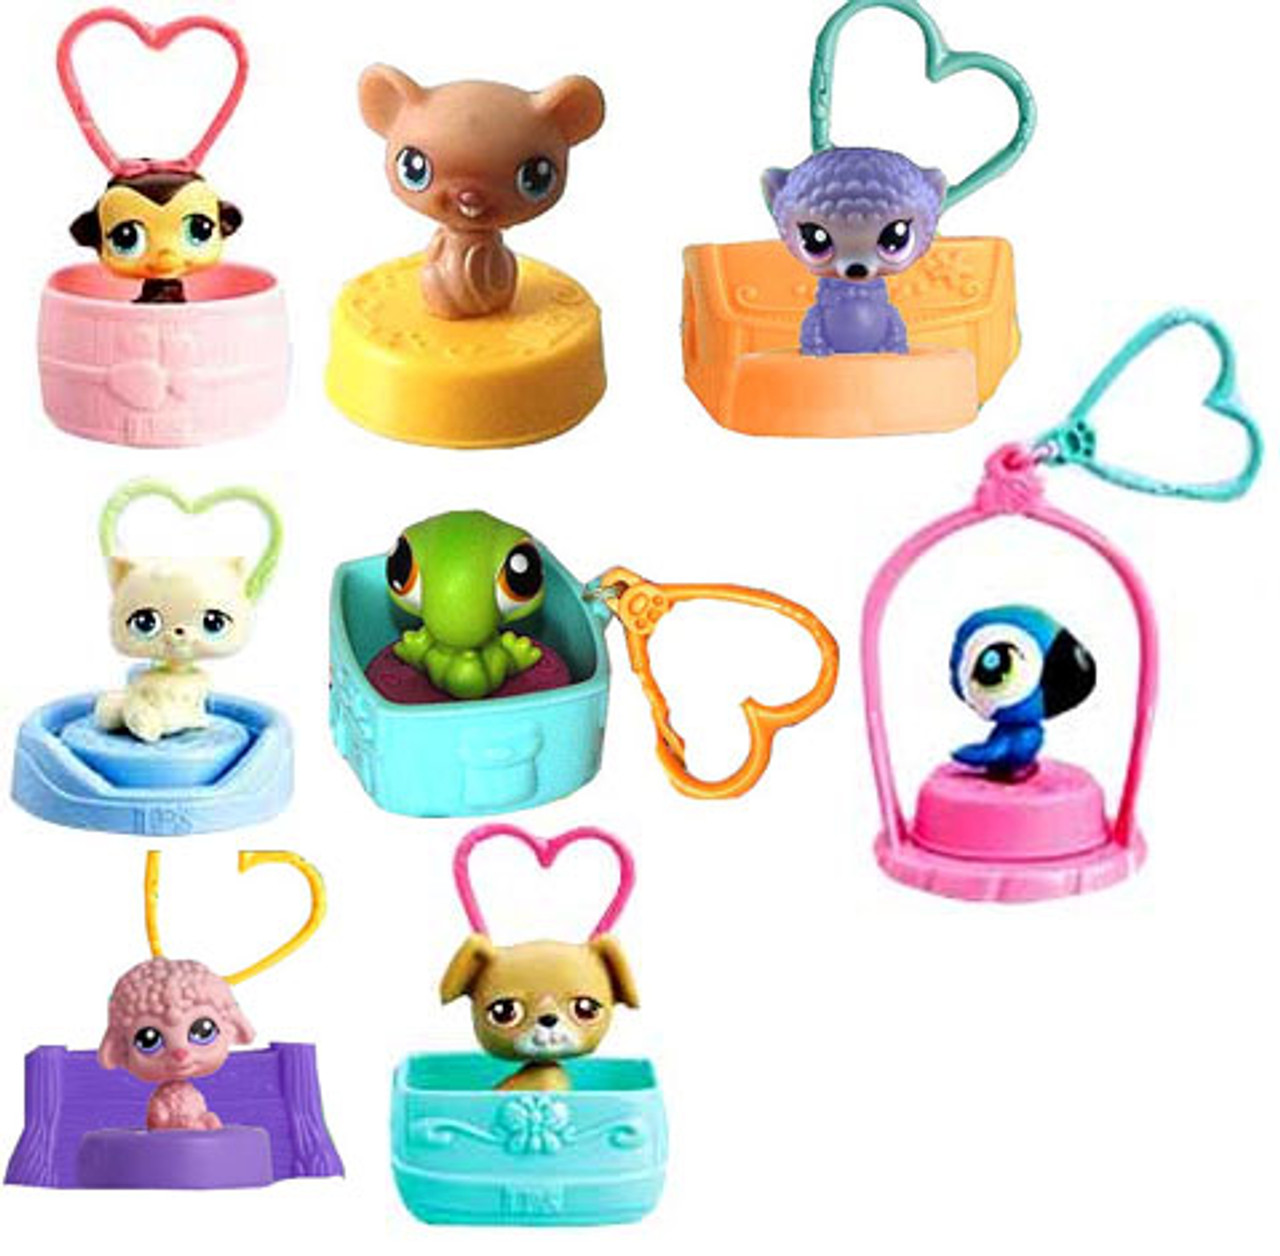 Littlest Pet Shop Mcdonalds Set Of 8 Figures Random Colors Hasbro Toys Toywiz - roblox toys at mcdonalds